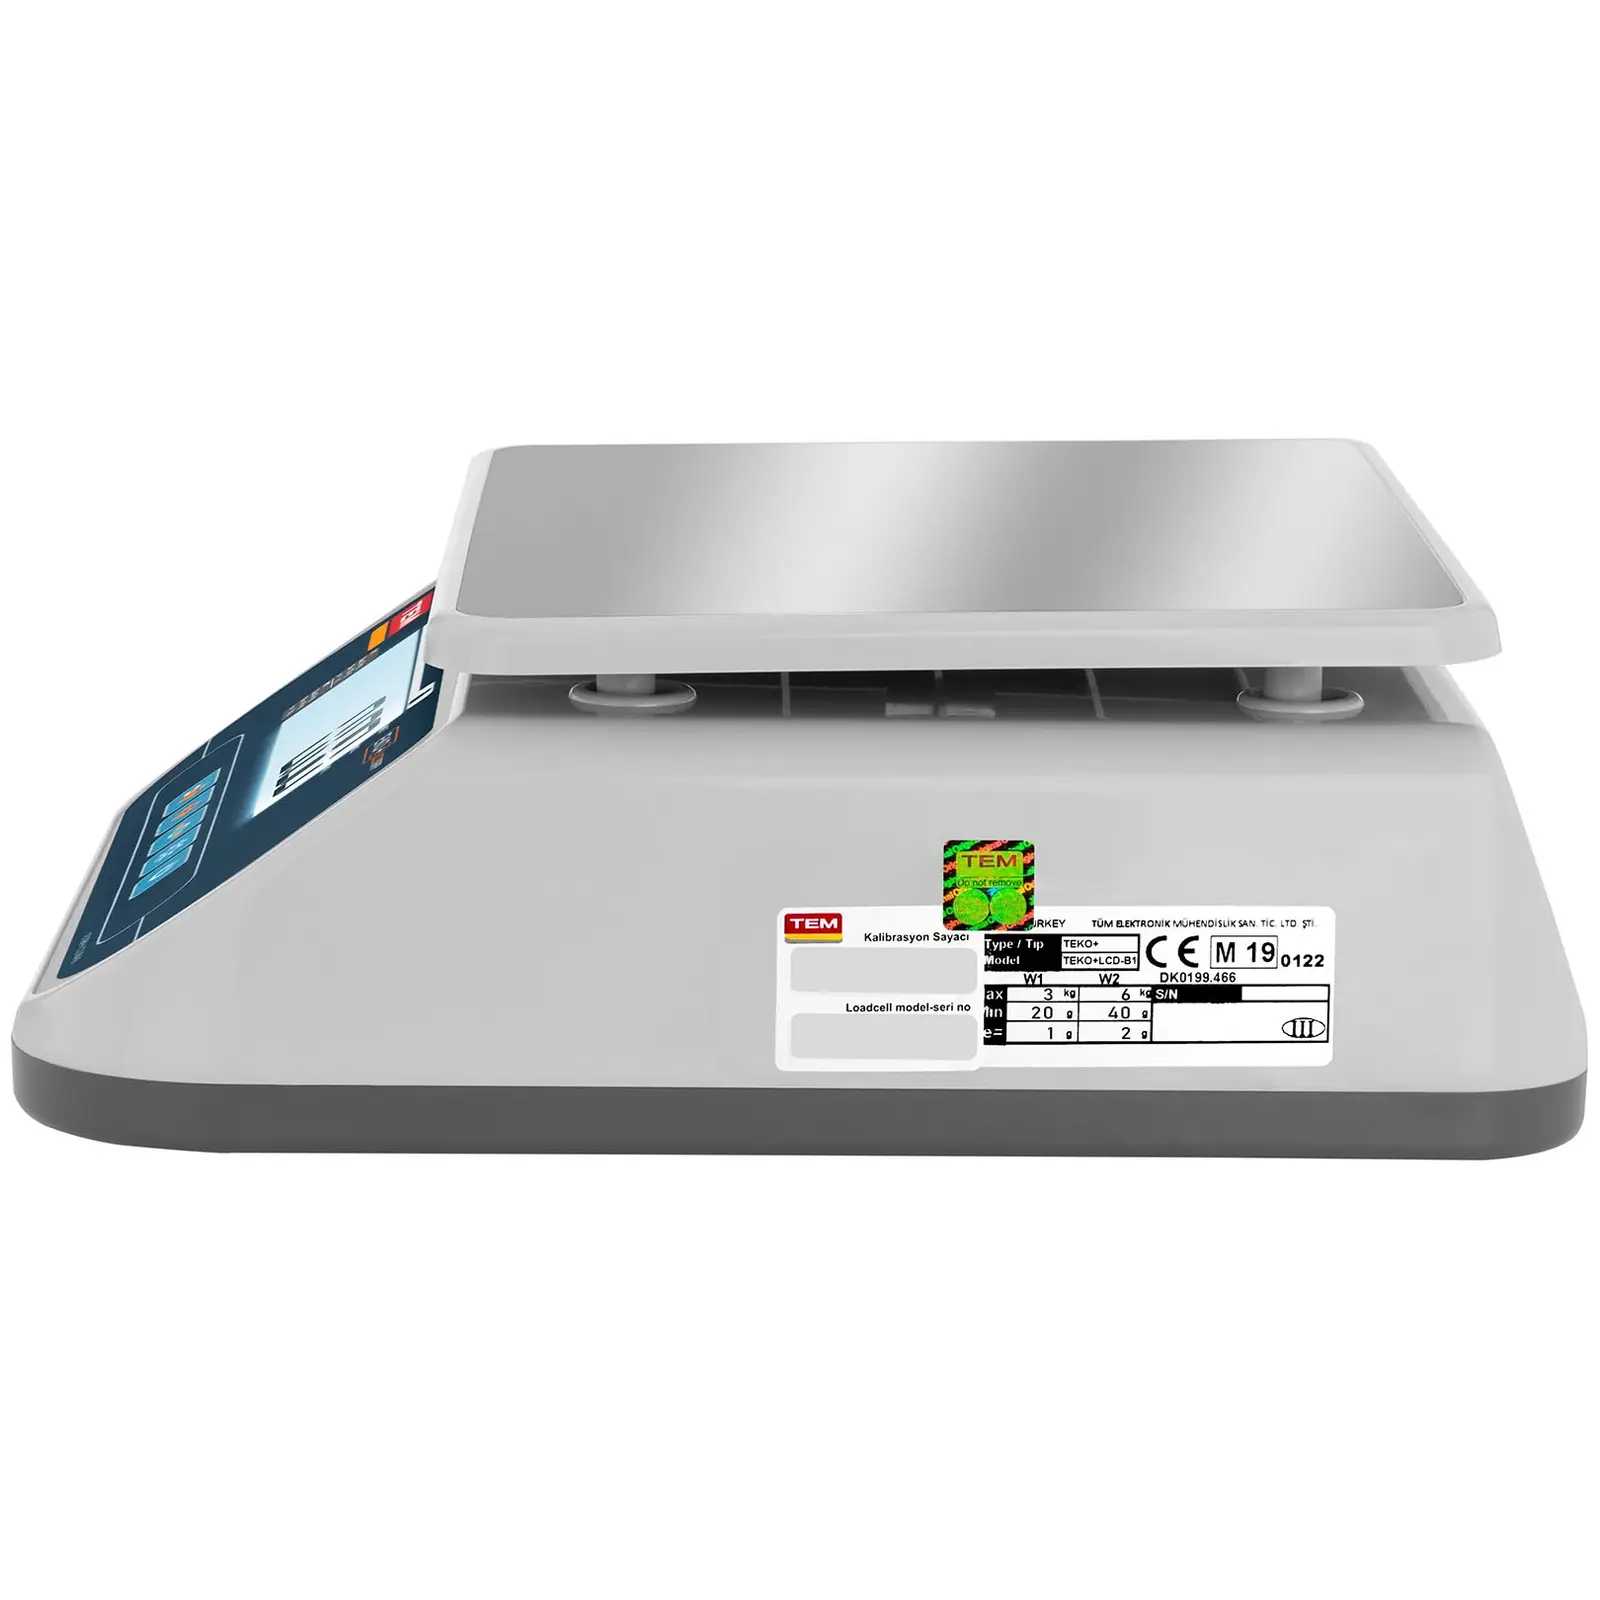 Stolová váha - ciachovaná - 6 kg/2 g - LCD